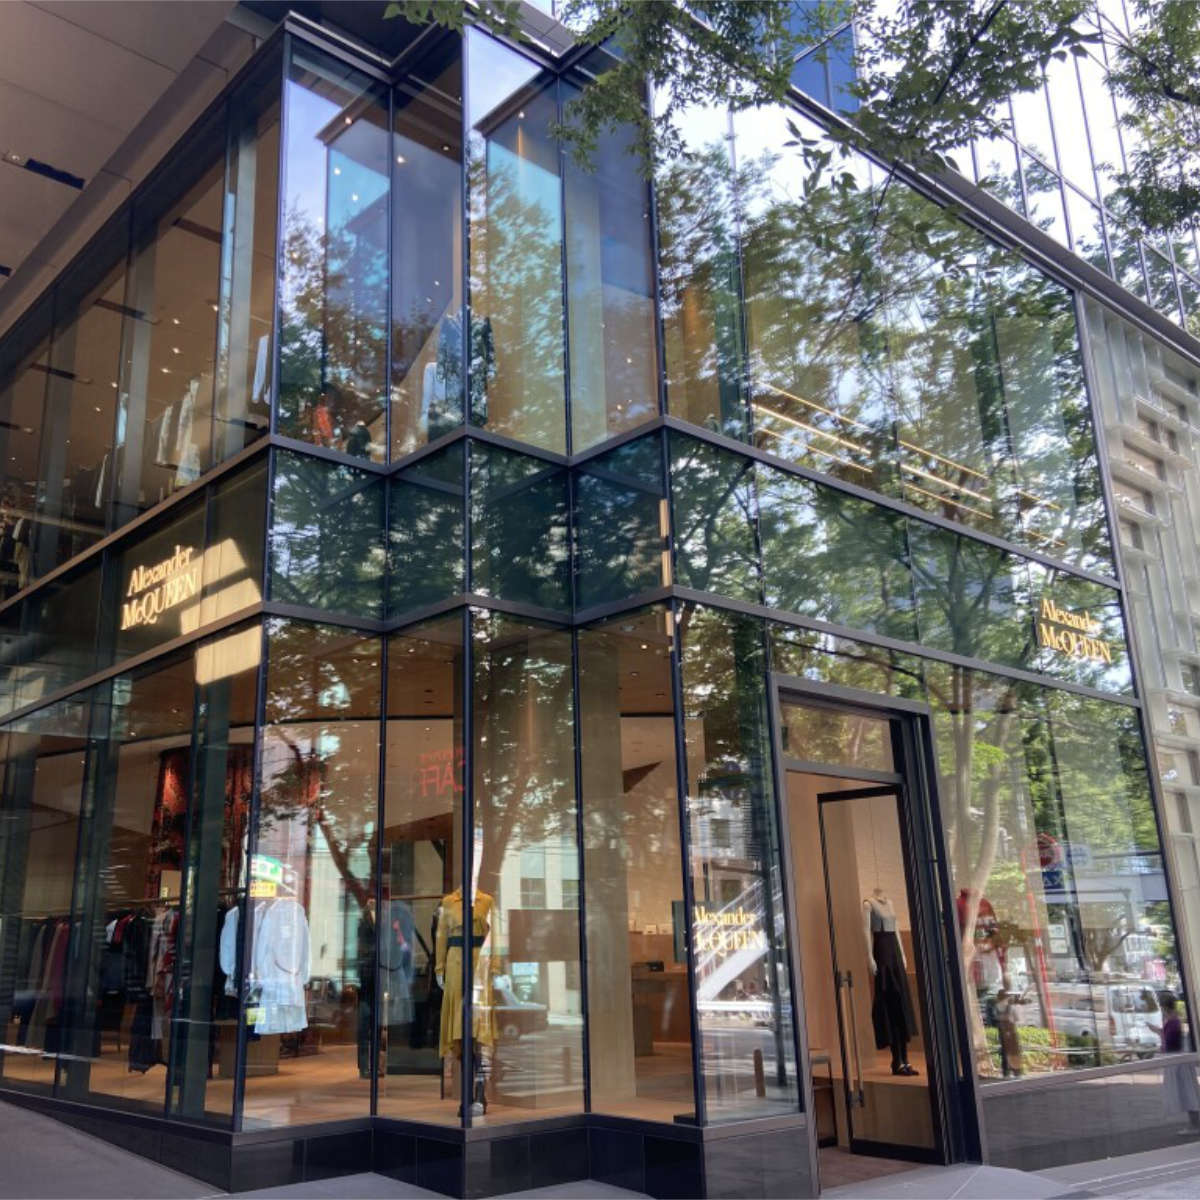 Alexander McQueen opens Tokyo flagship at Omotesando - Inside Retail Asia